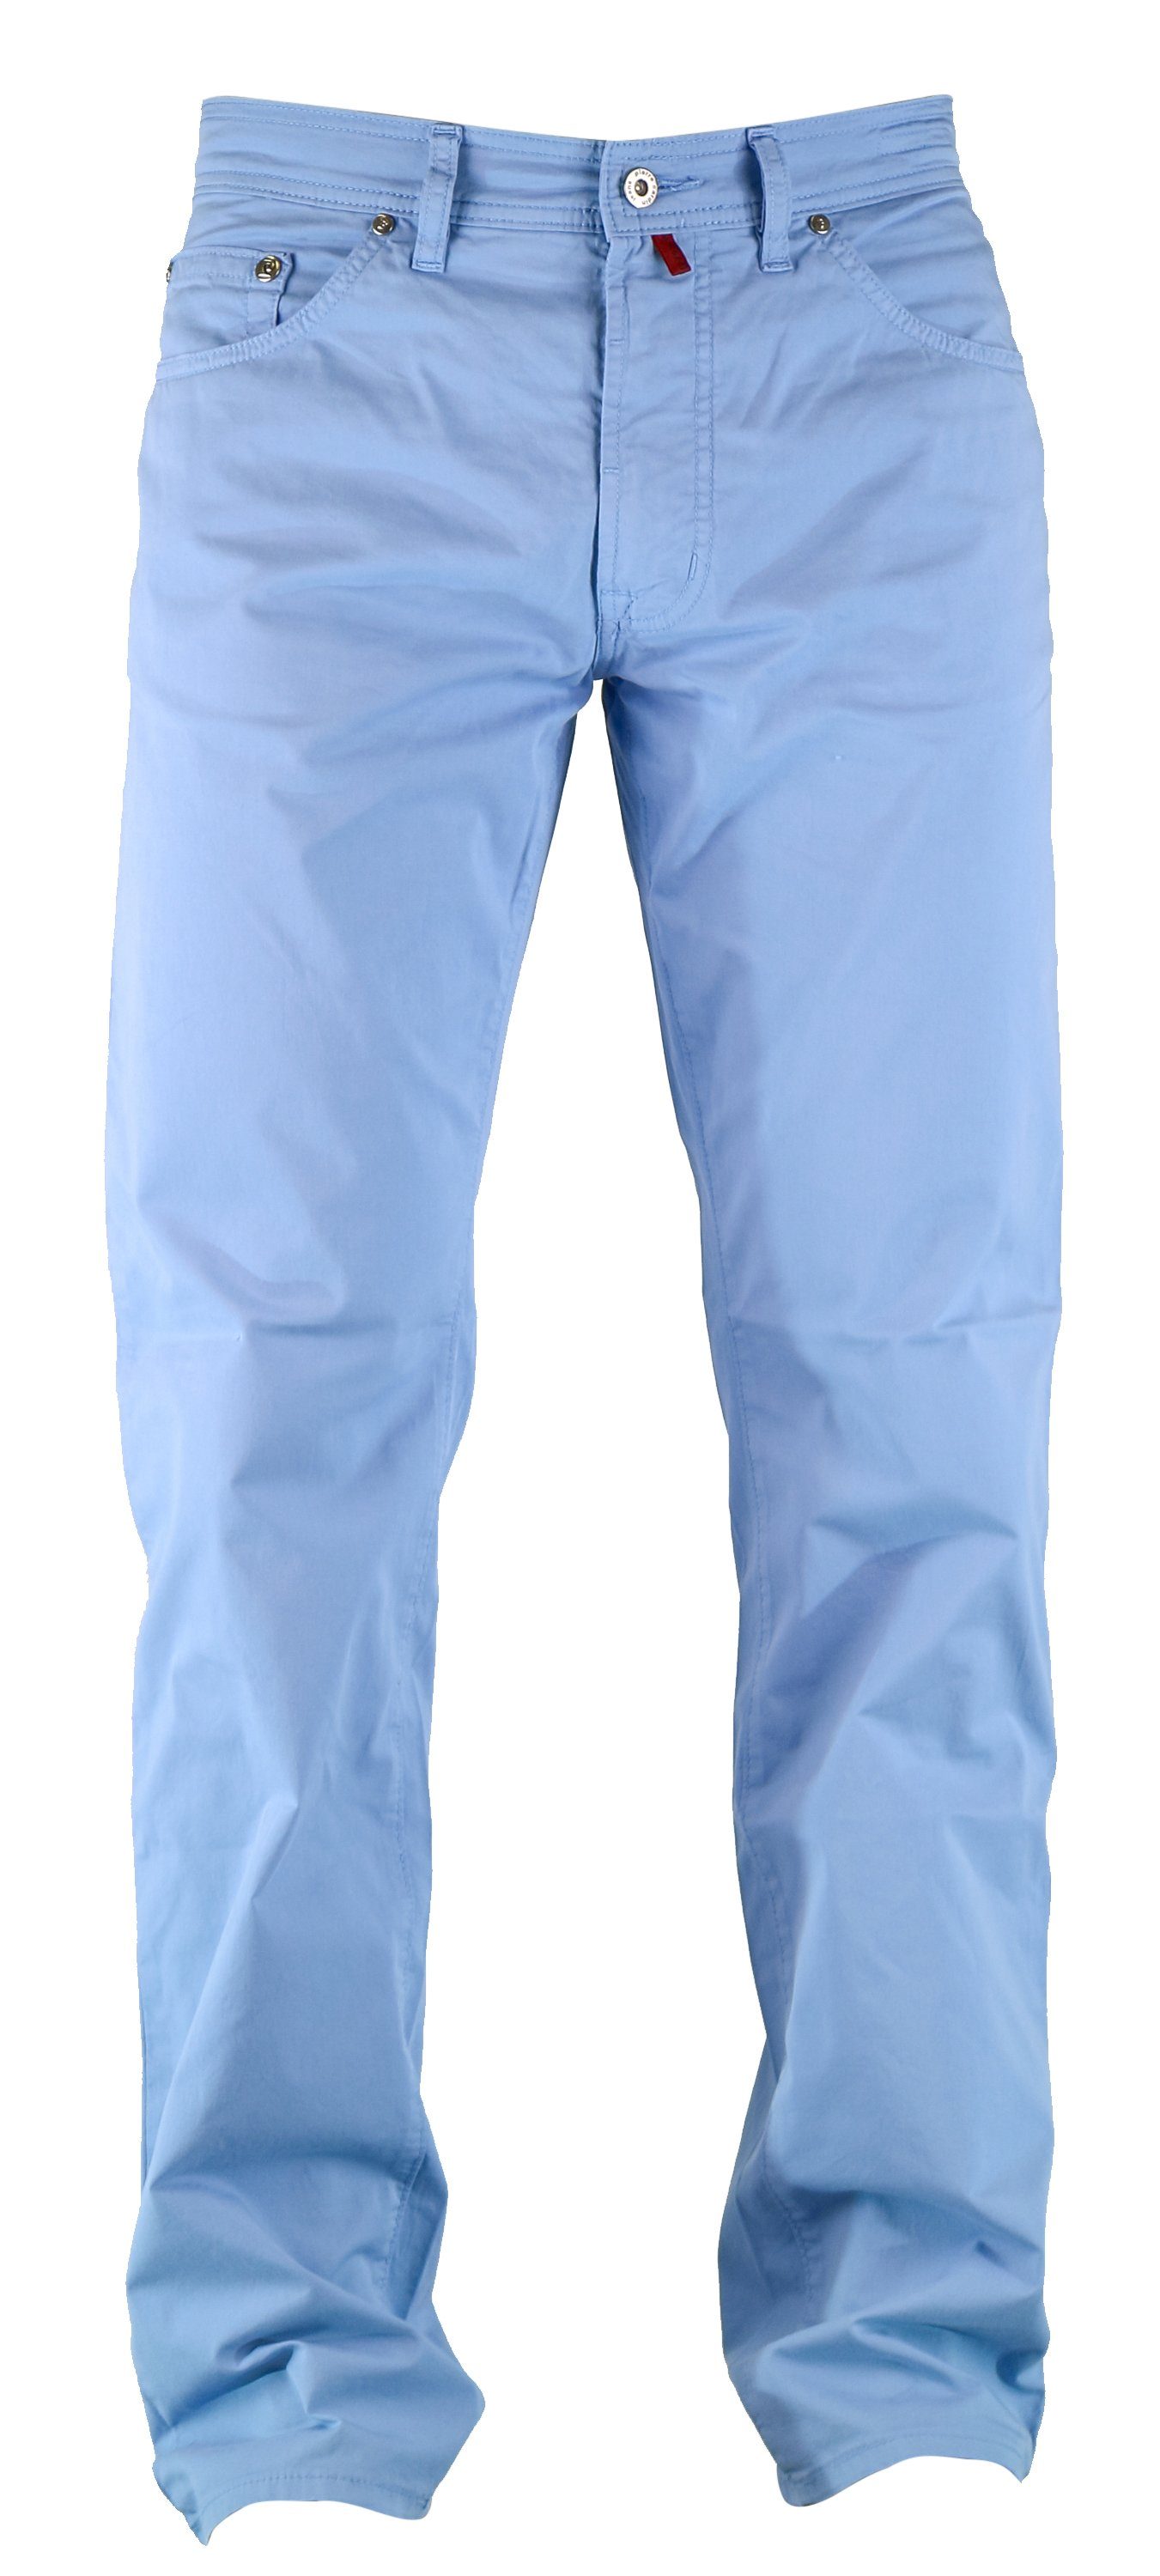 Pierre Cardin 5-Pocket-Jeans PIERRE CARDIN 2021.65 DEAUVILLE summer blue 3196 air touch